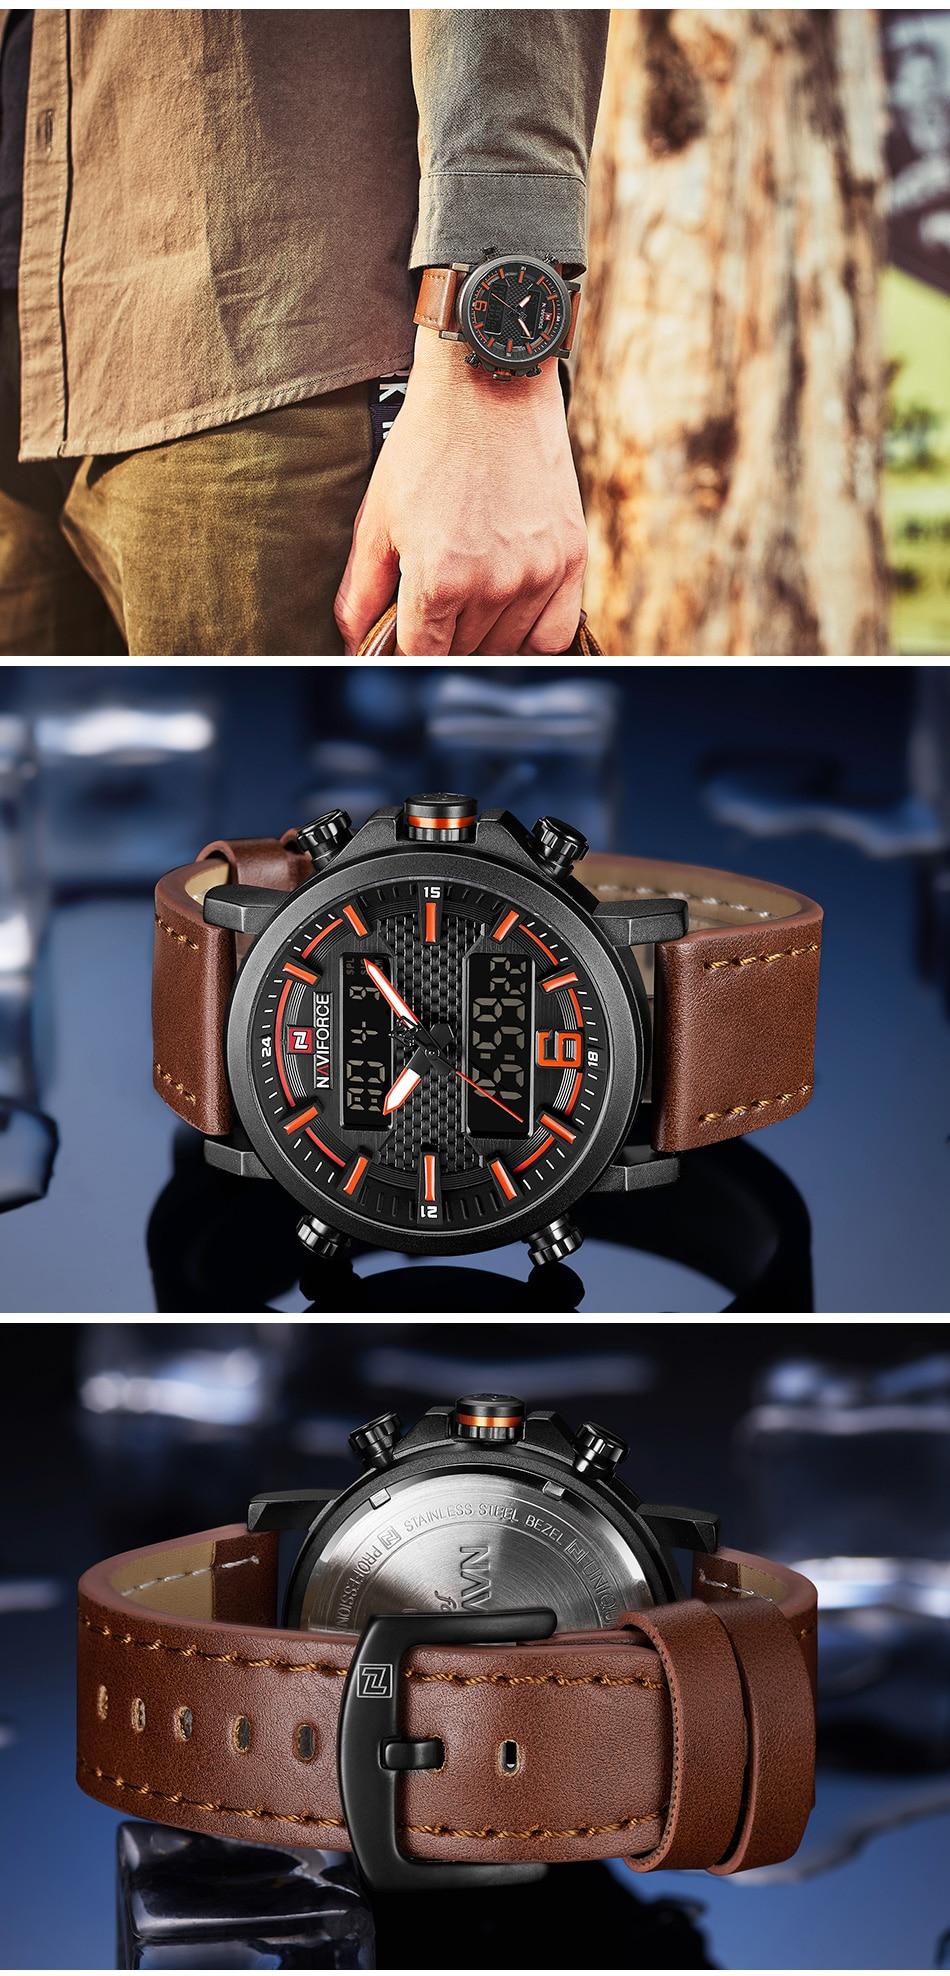 2019 NAVIFORCE New Men's Fashion Sport Watch Men Leather Waterproof Quartz Watches Male Date LED Analog Clock Relogio Masculino